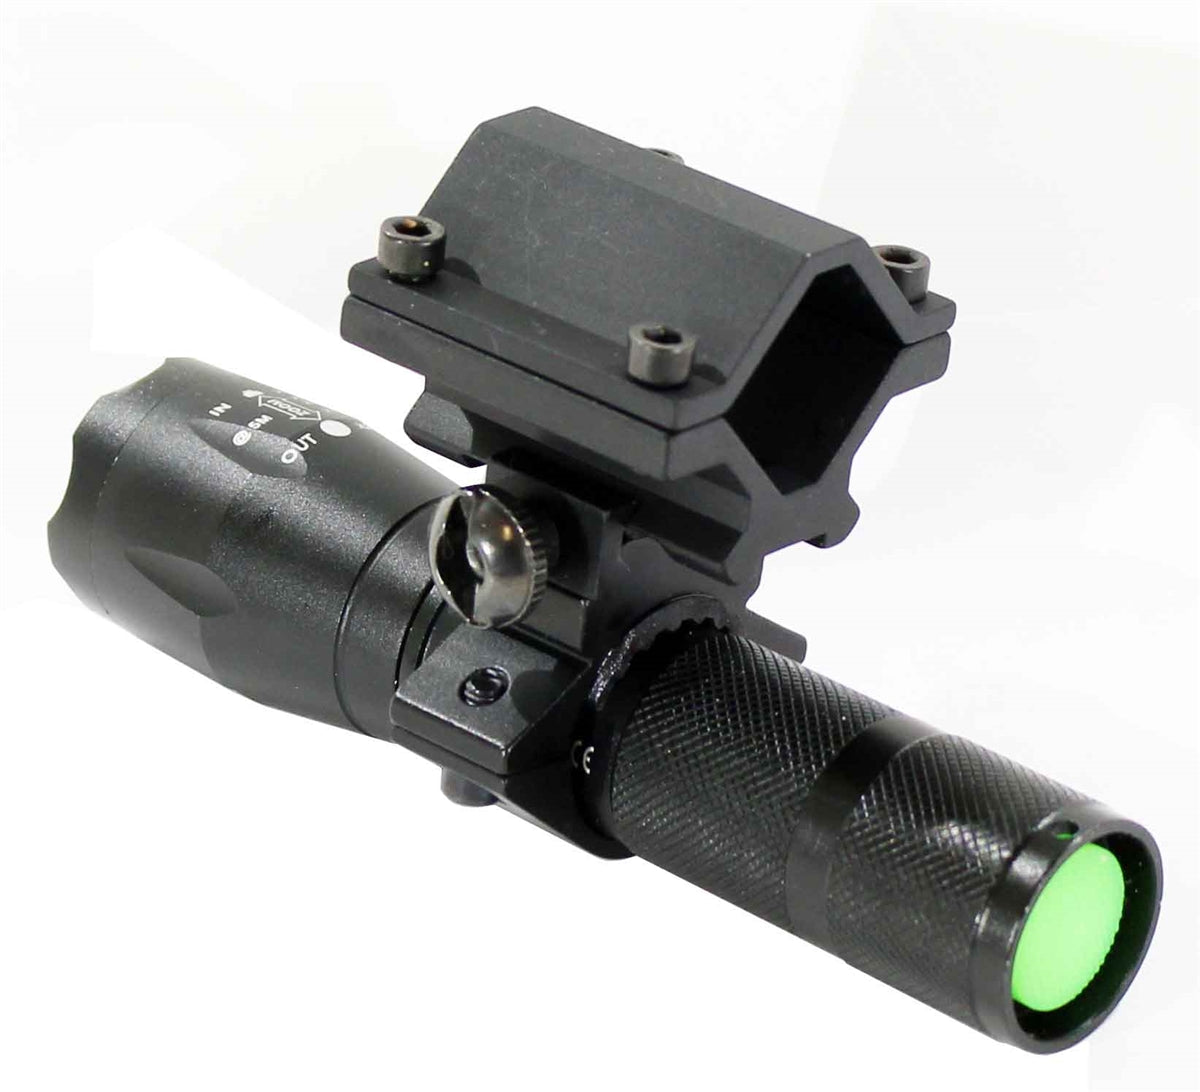 stevens 320 20 gauge pump flashlight.